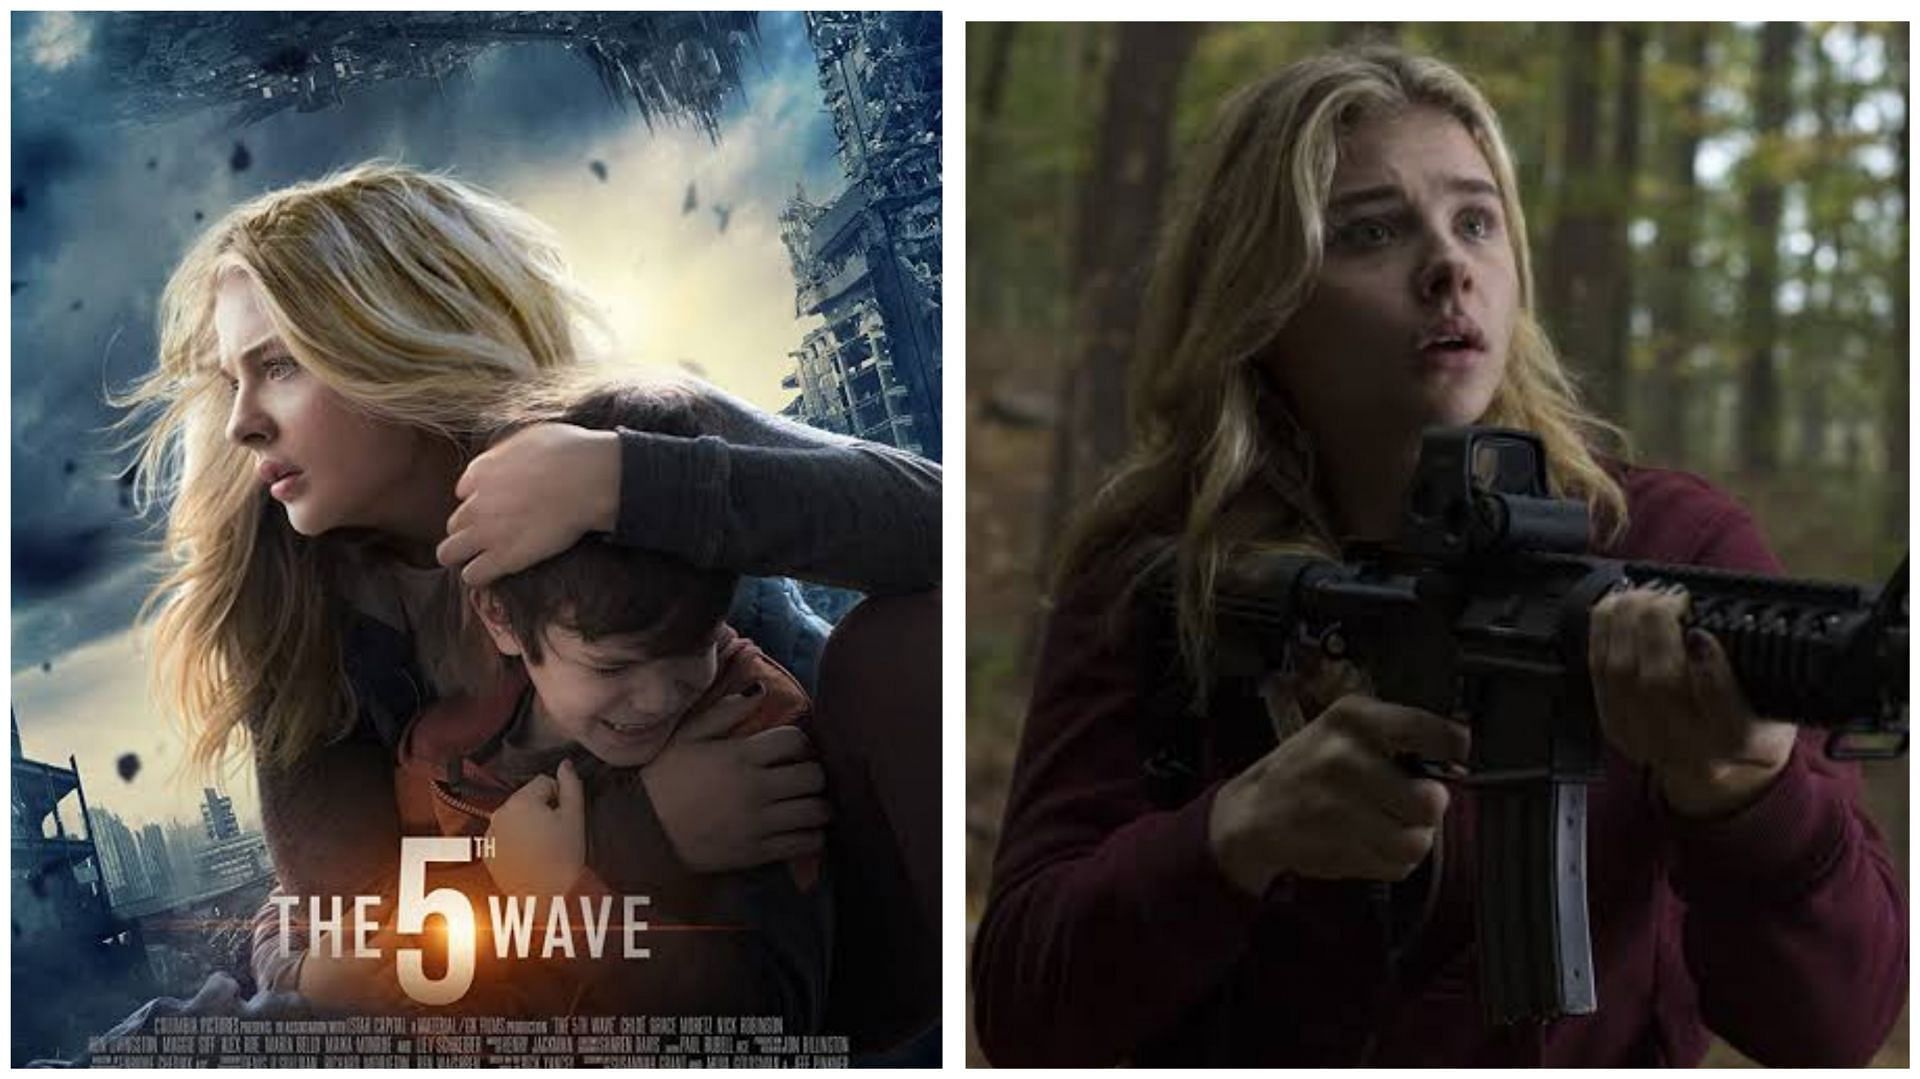 The 5th Wave (Images via IMDb)